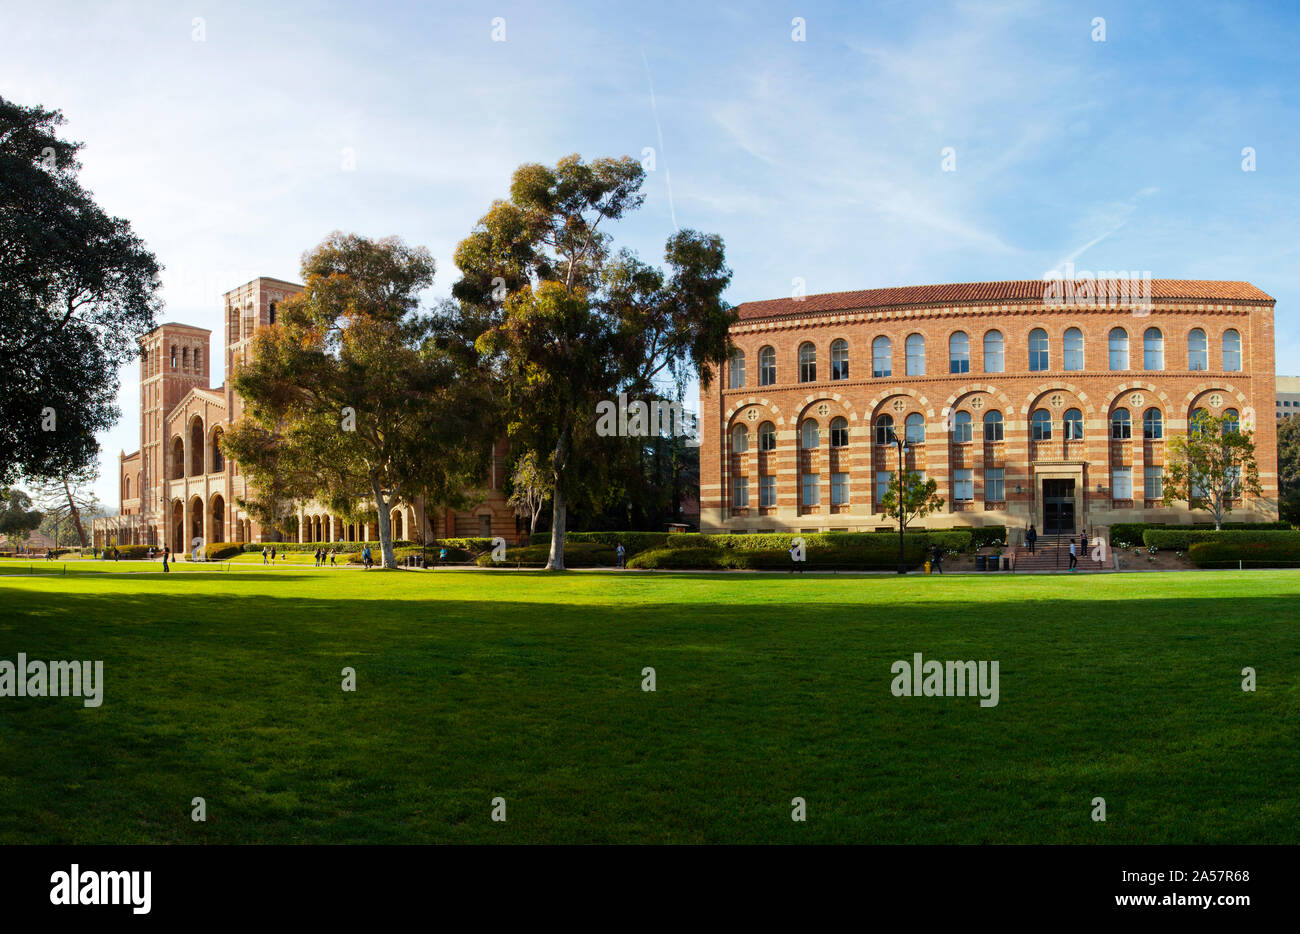 Royal hall of university campus, University Of California, City Of Los Angeles, Los Angeles County, California, USA Stock Photo